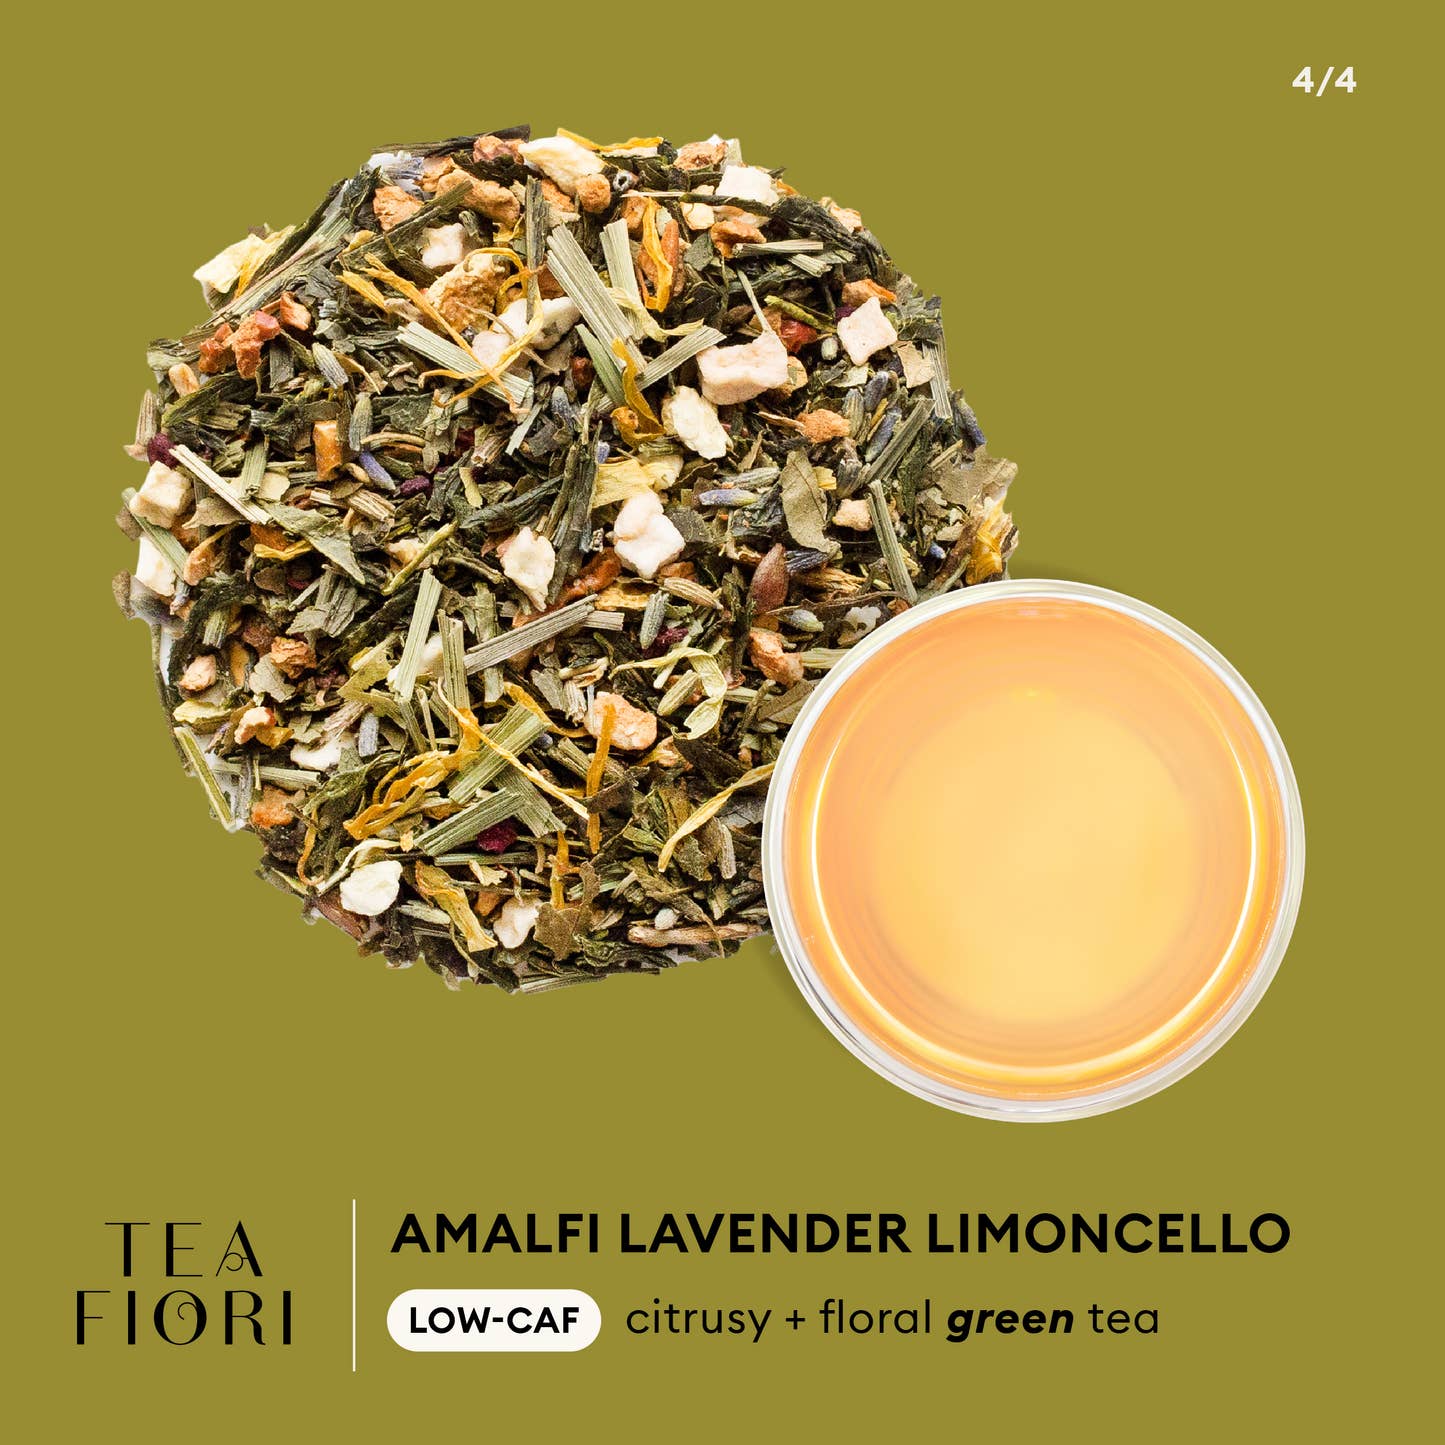 Tea Fiori - Amalfi Lavender Limoncello low-caf, citrusy + floral infographic